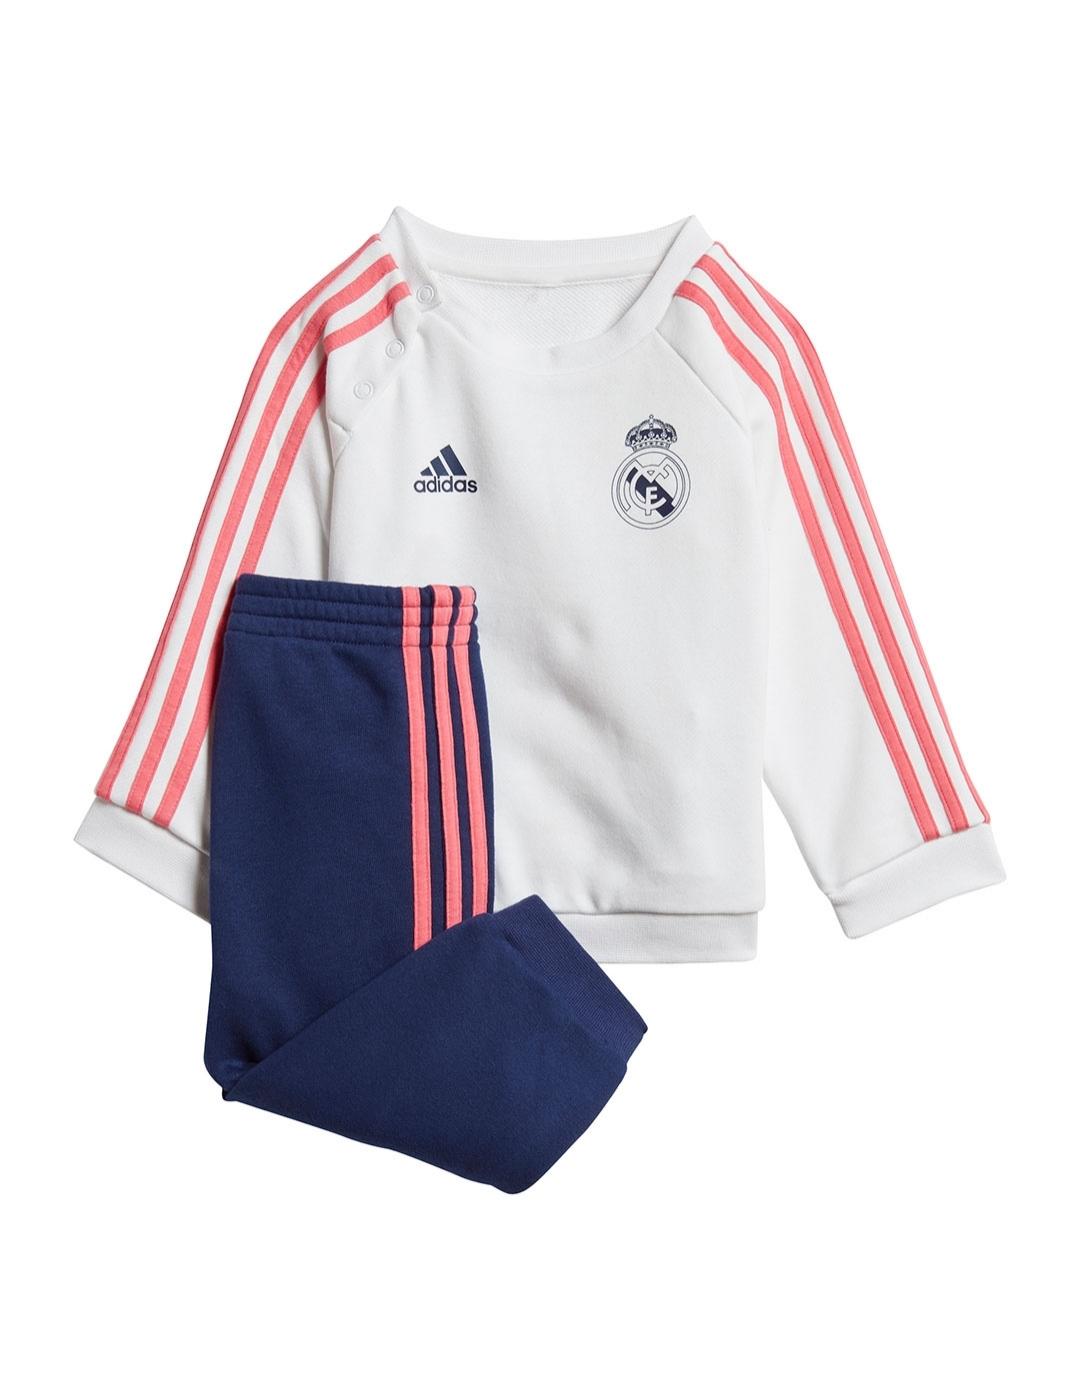 Chándal adidas Real Madrid niño blanco